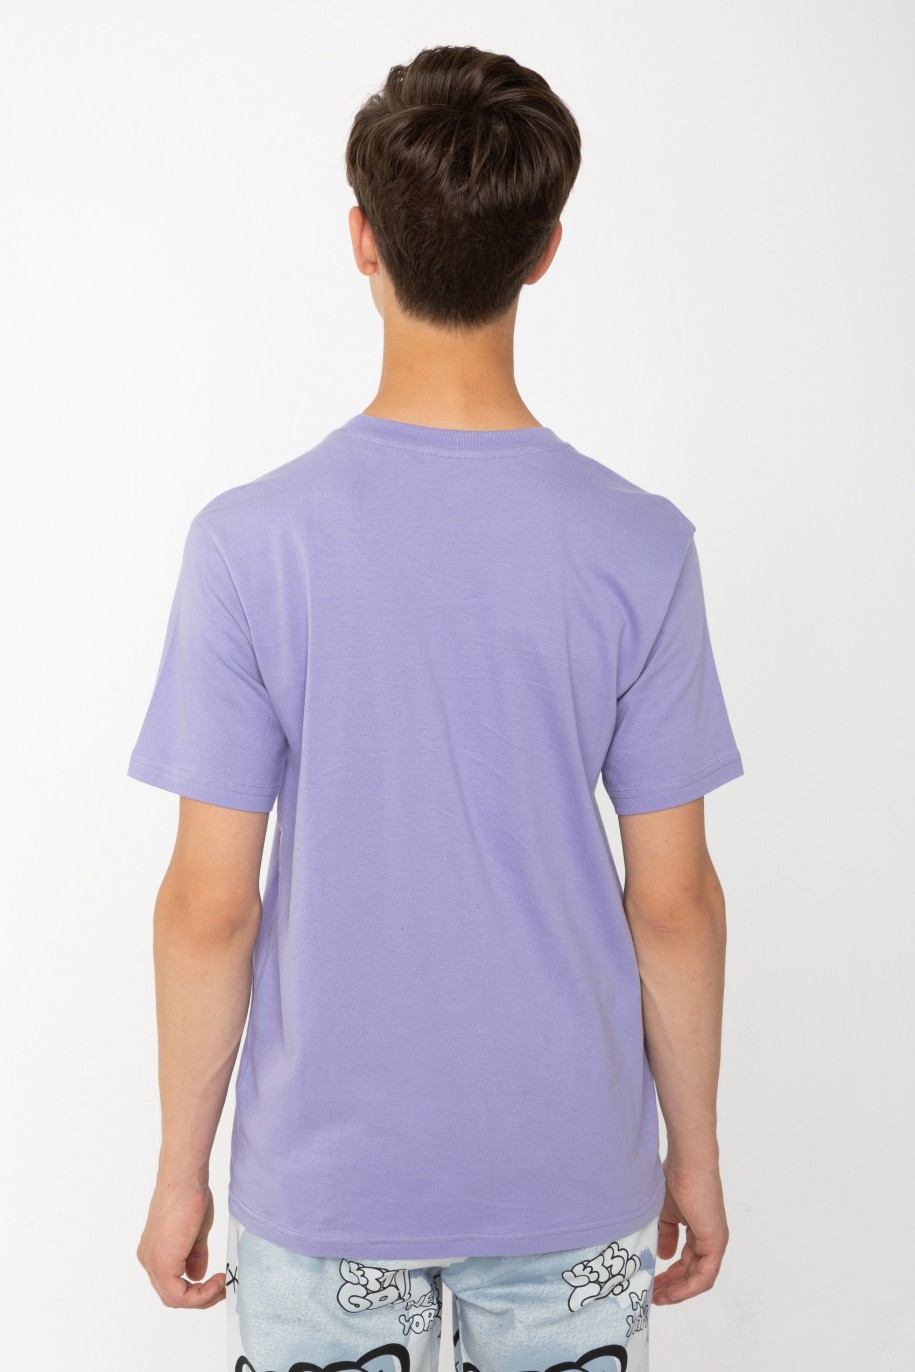 Fioletowy T-shirt z nadrukami - 43309